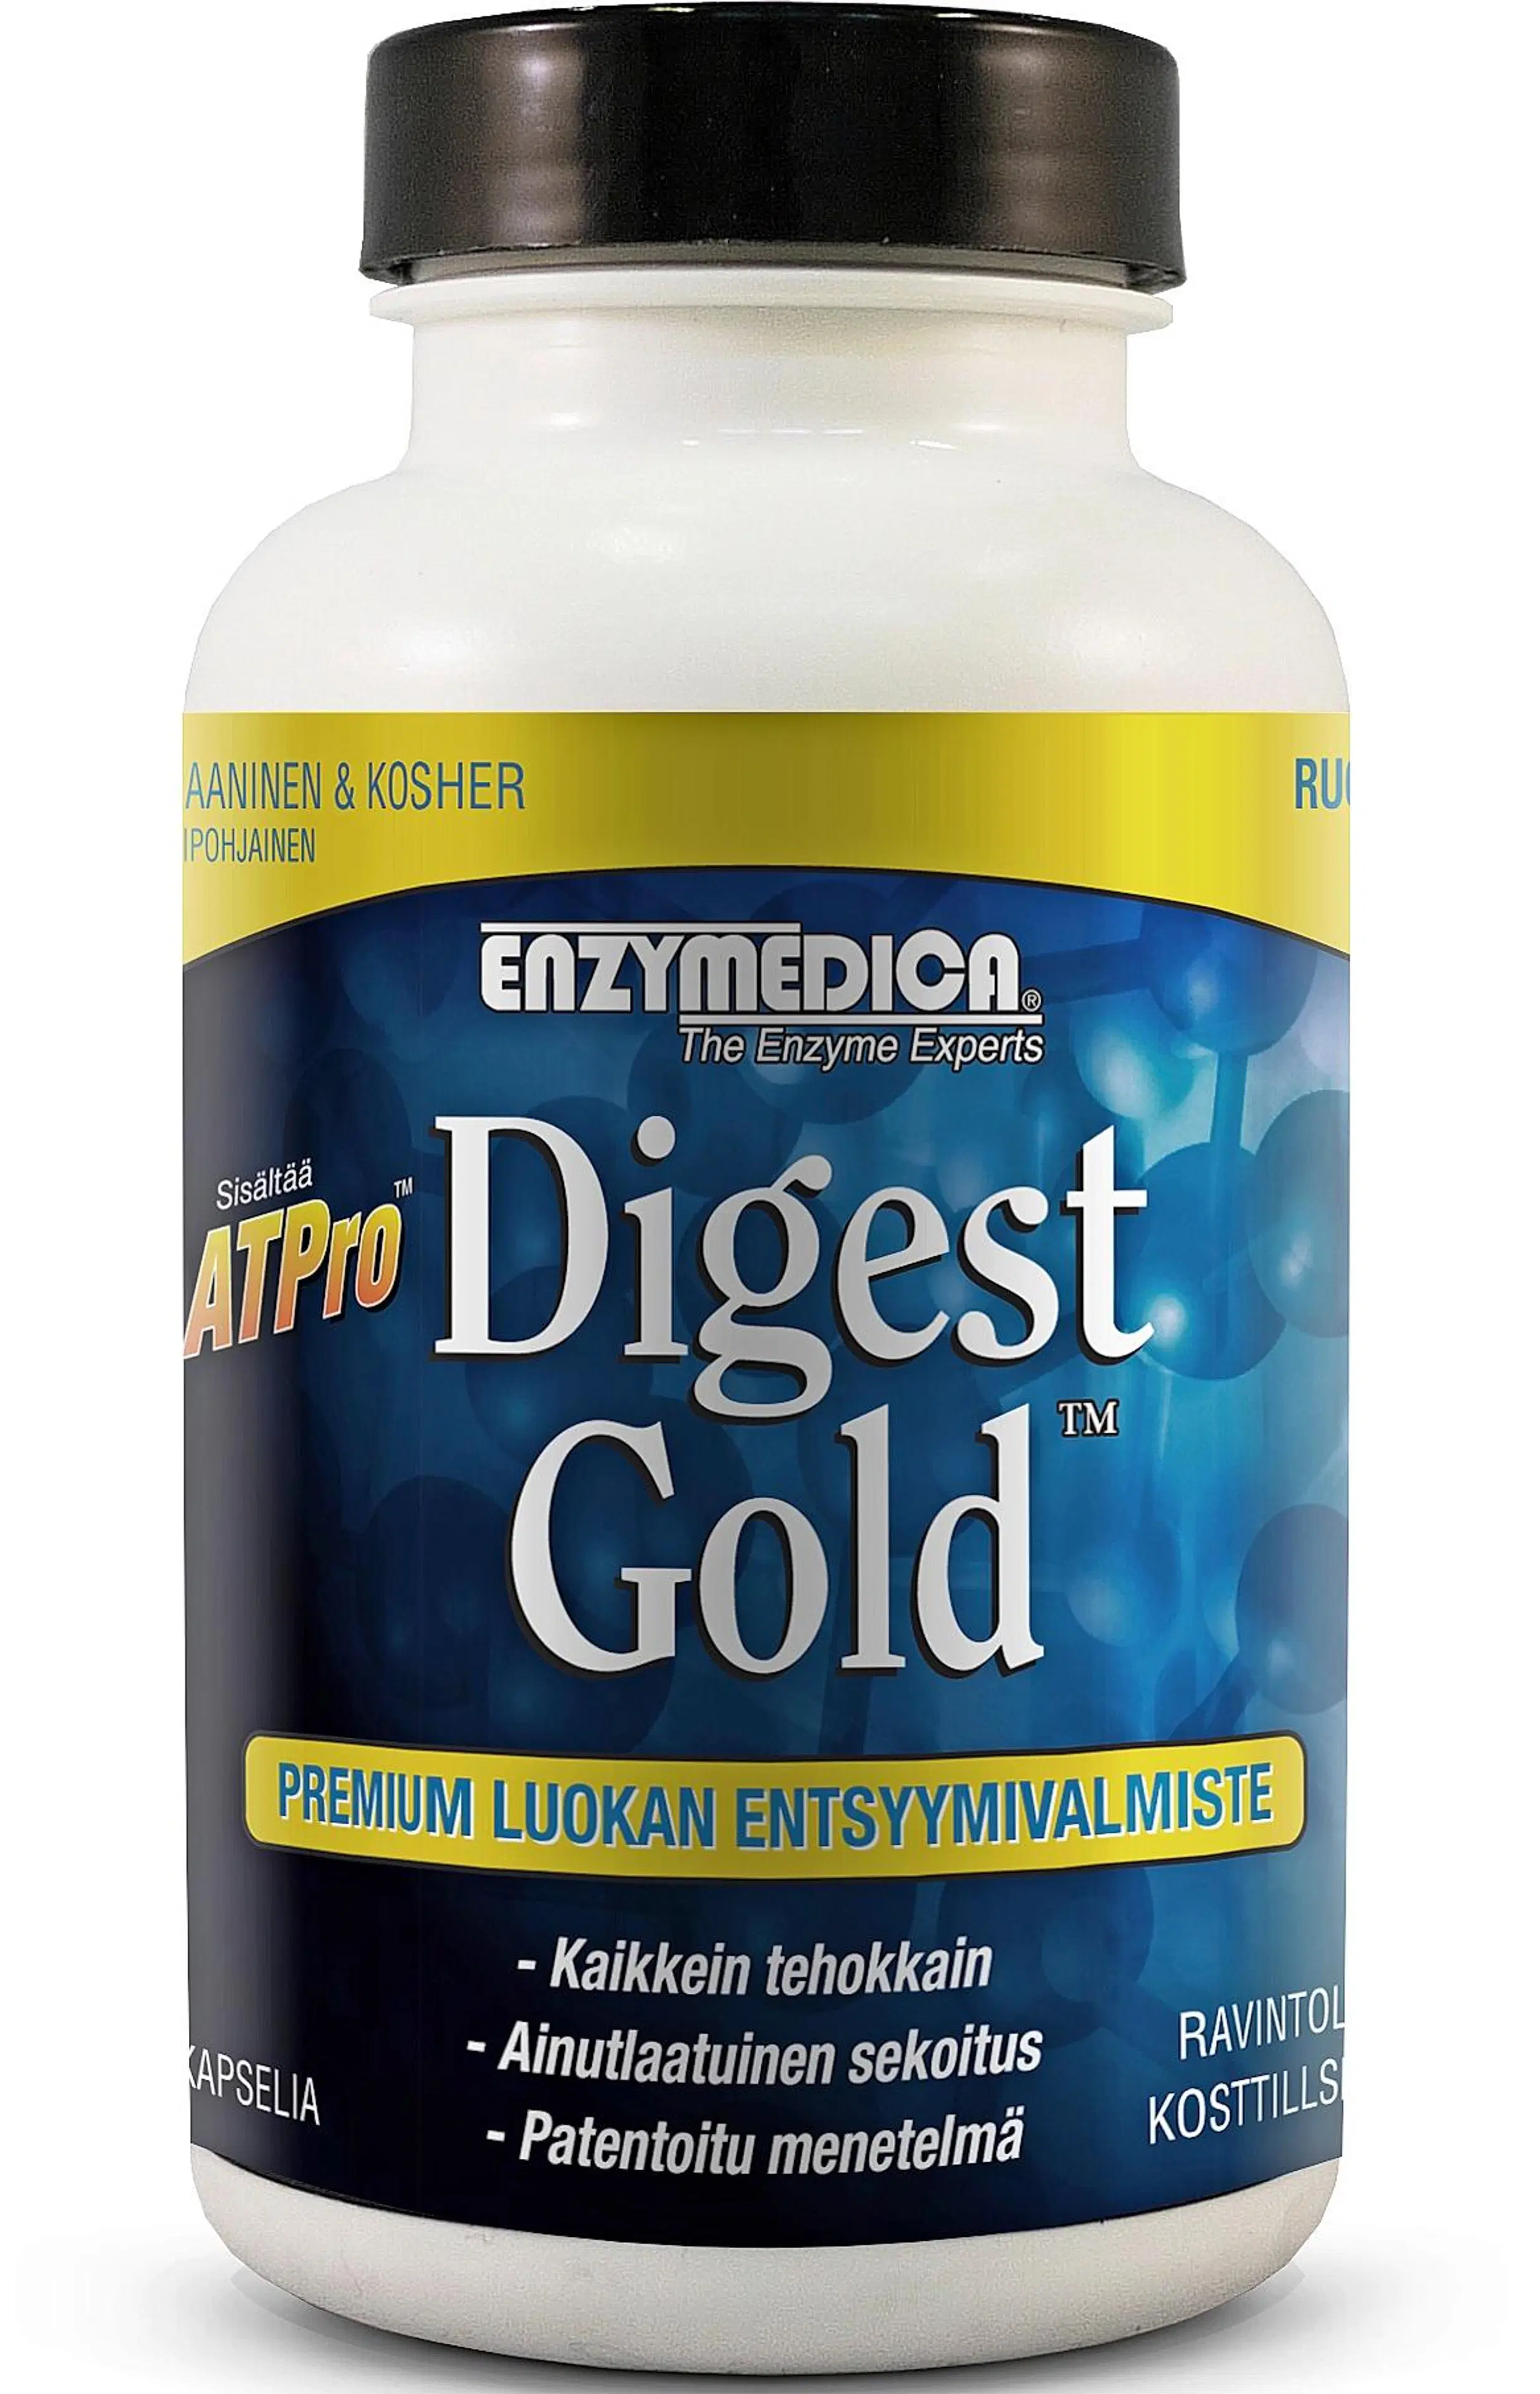 Enzymedica Digest Gold ravintolisä 90 kaps